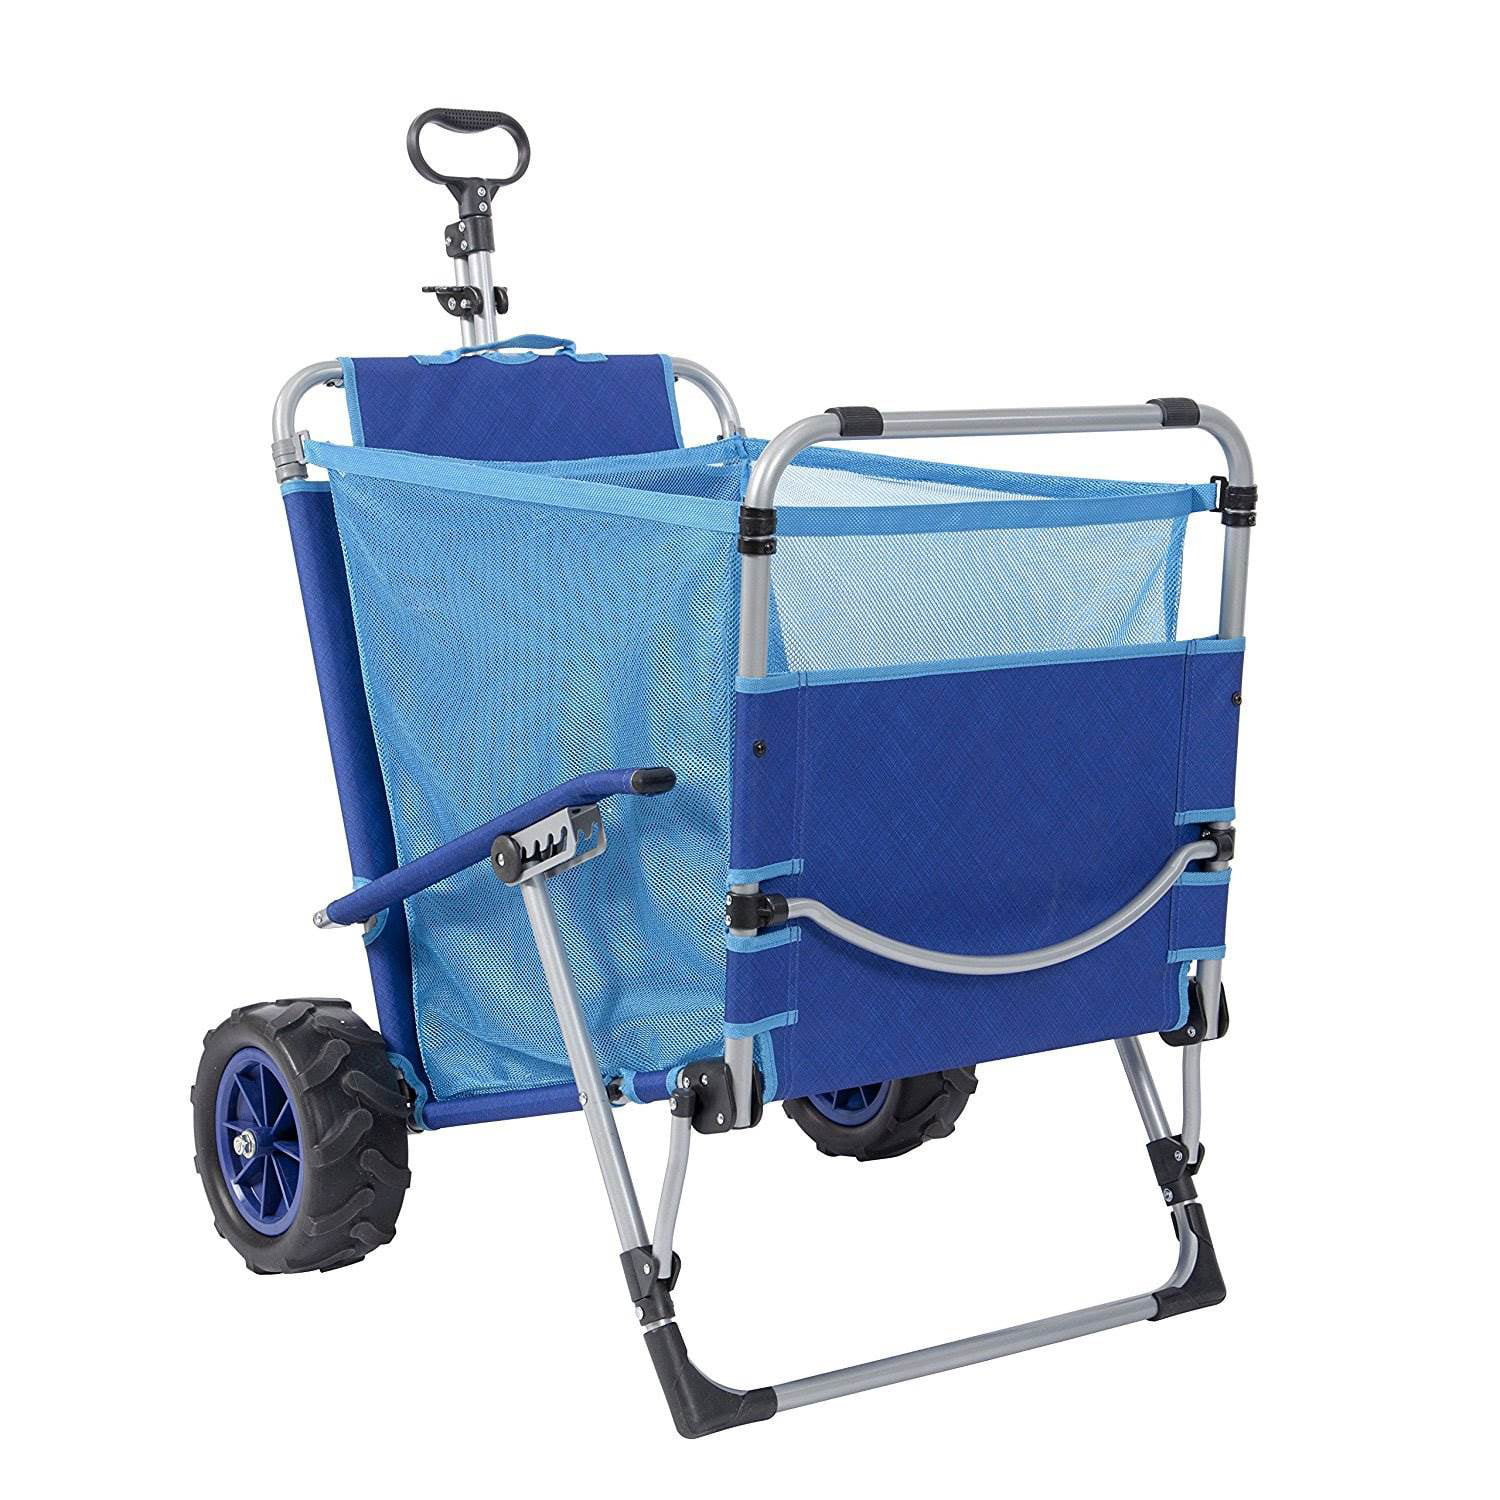 New Mac Beach Chair Cart with Simple Decor